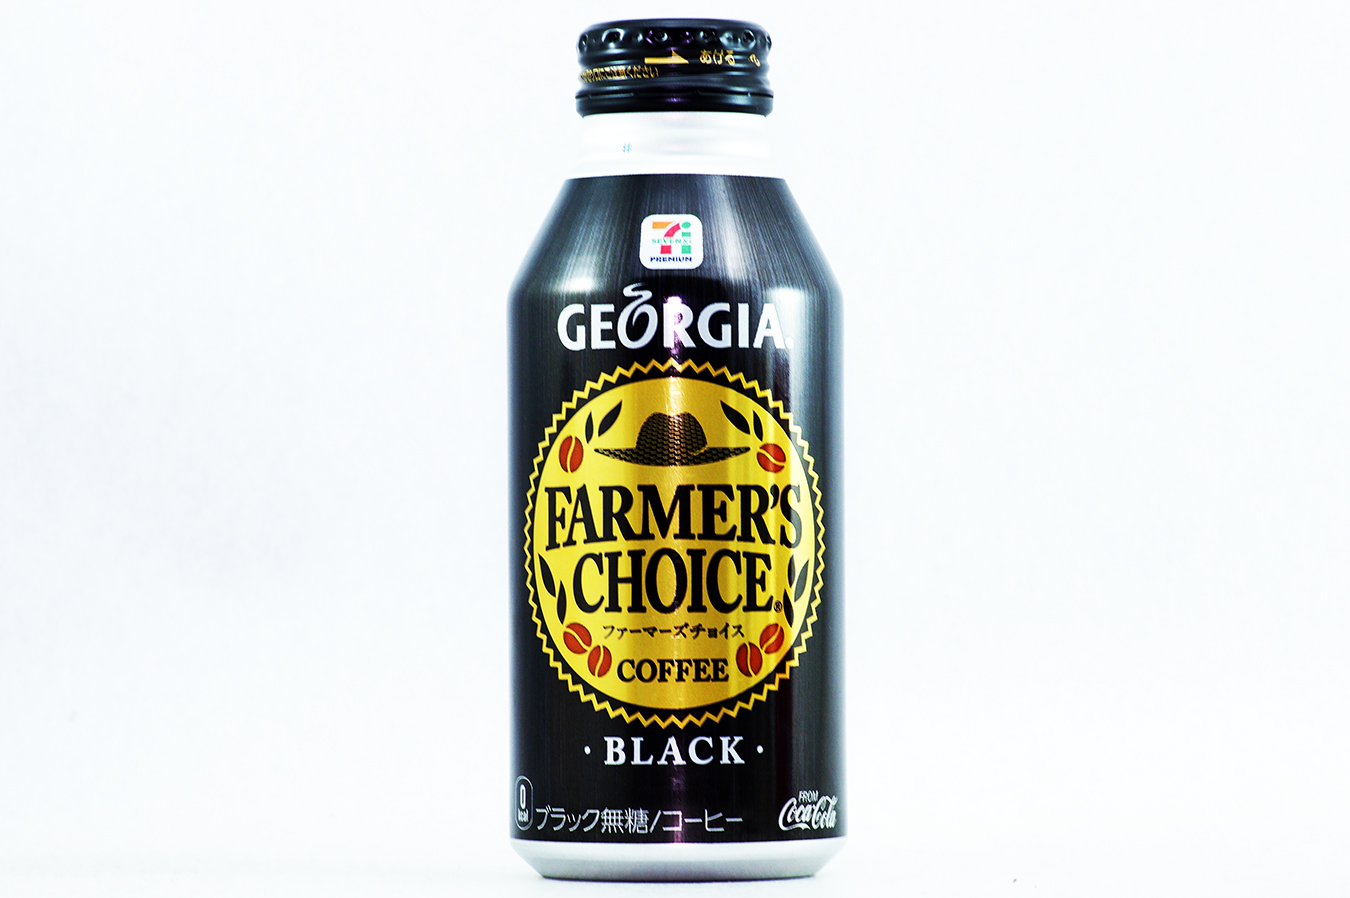 GEORGIA ファーマーズチョイス ブラック 400MLボトル缶 2018年4月